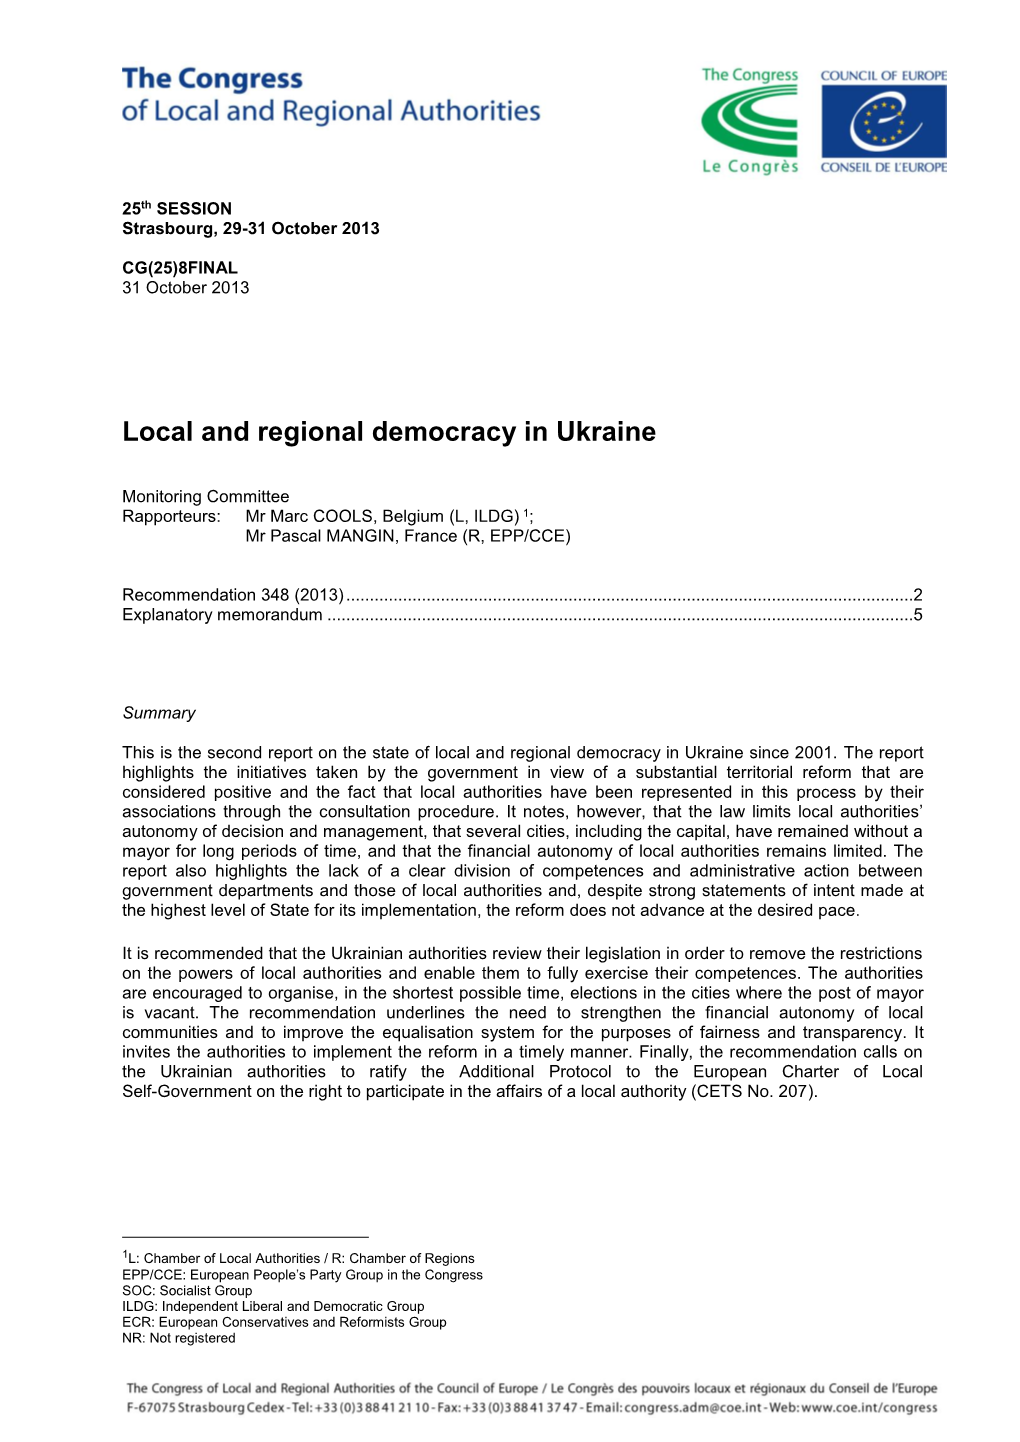 Local and Regional Democracy in Ukraine